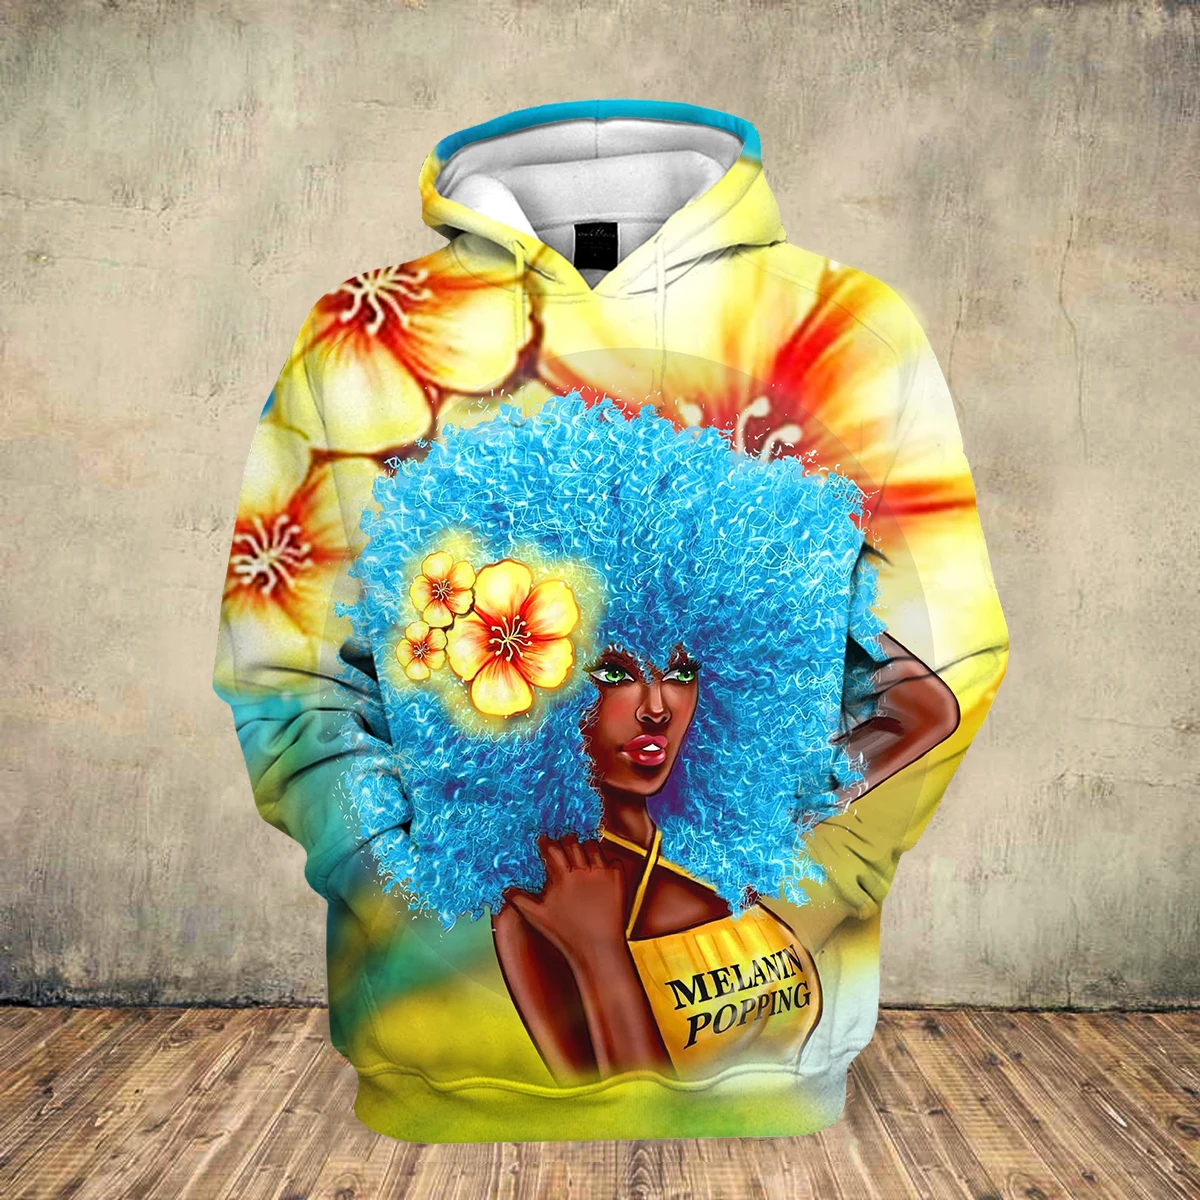 2020 Hot Sale Black girl Printed Hoodies Women Fashion 3d Hoodies Sweatshirts Lady Tracksuits Streetwear Coat Drop Ship